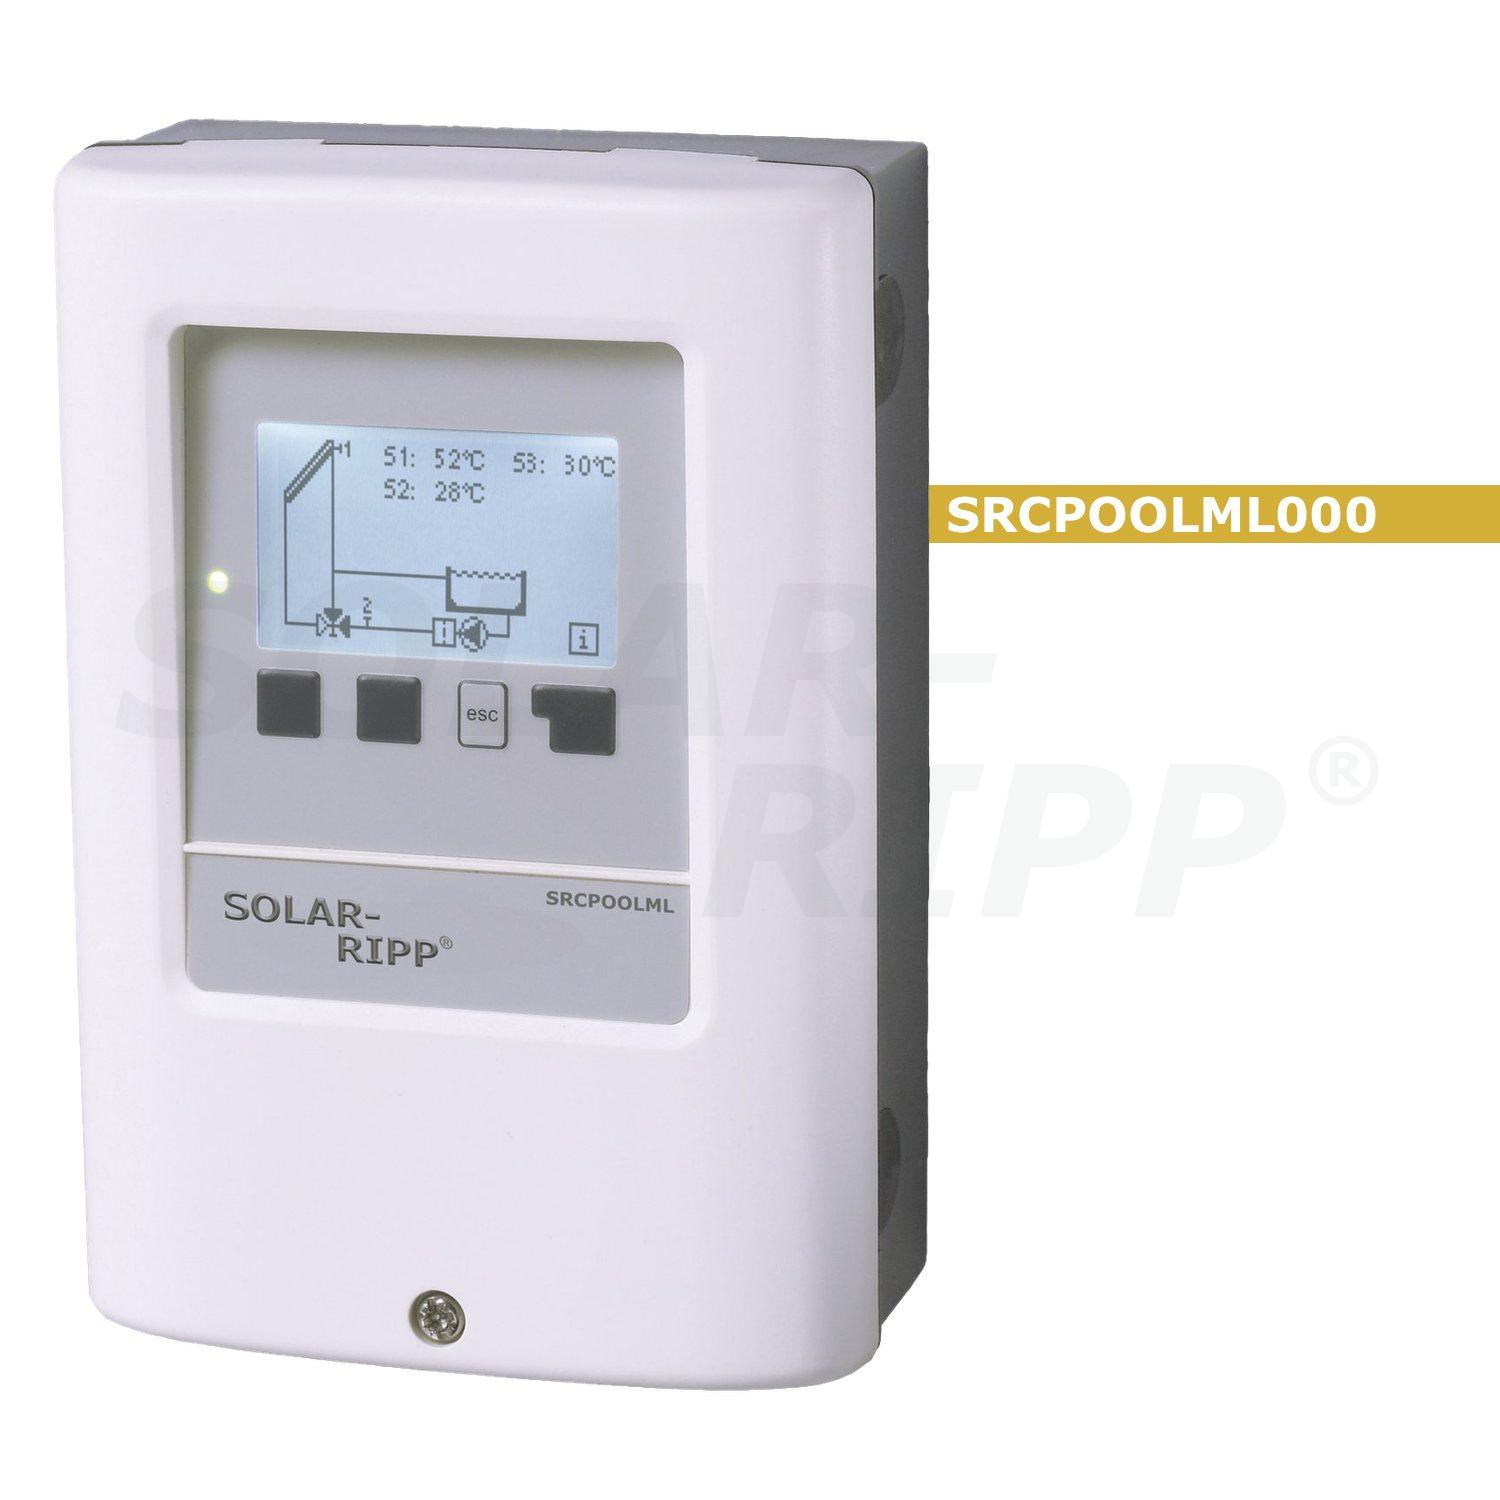 Controlador solar SOLAR-RIPP® SRCPOOLML000